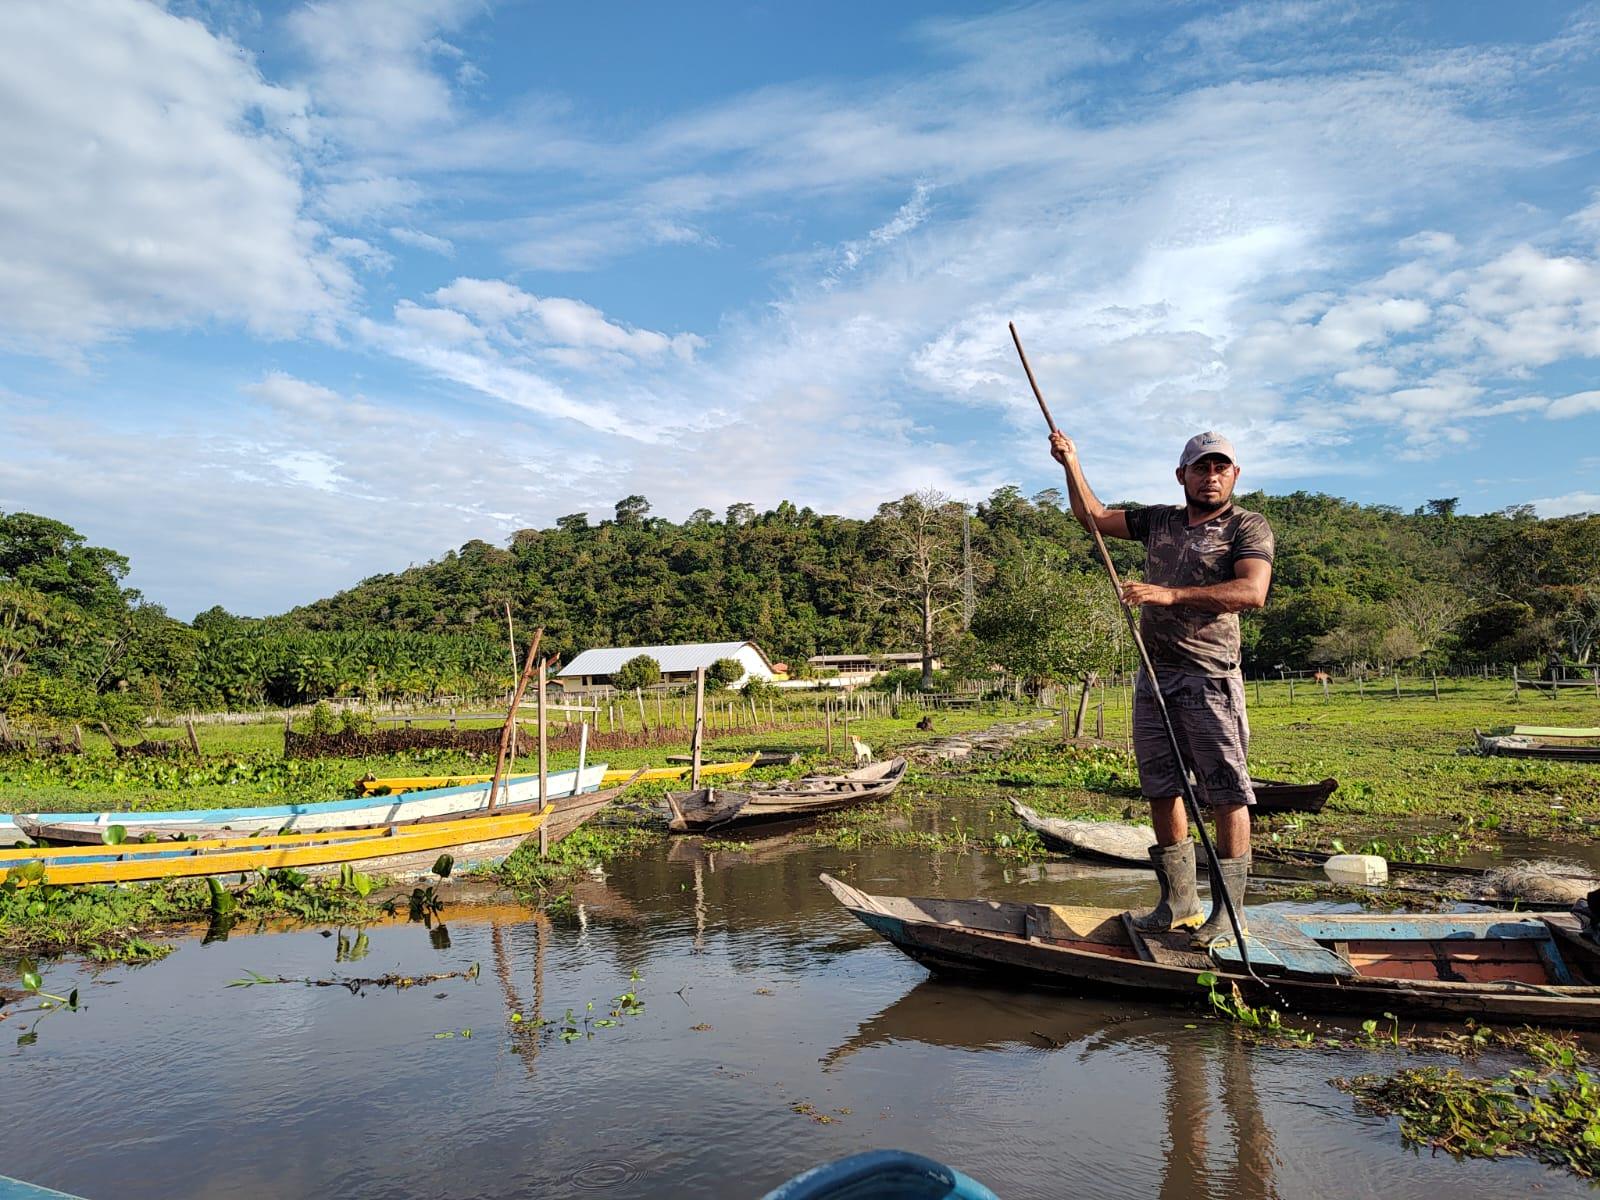 Bruno Ubiali: Fishing with highly skilled fishermen at Quilombo Tiningu, a traditional territory of descendants of enslaved people (Maroon Community) in Santarém, Pará, Brazilian Amazon.